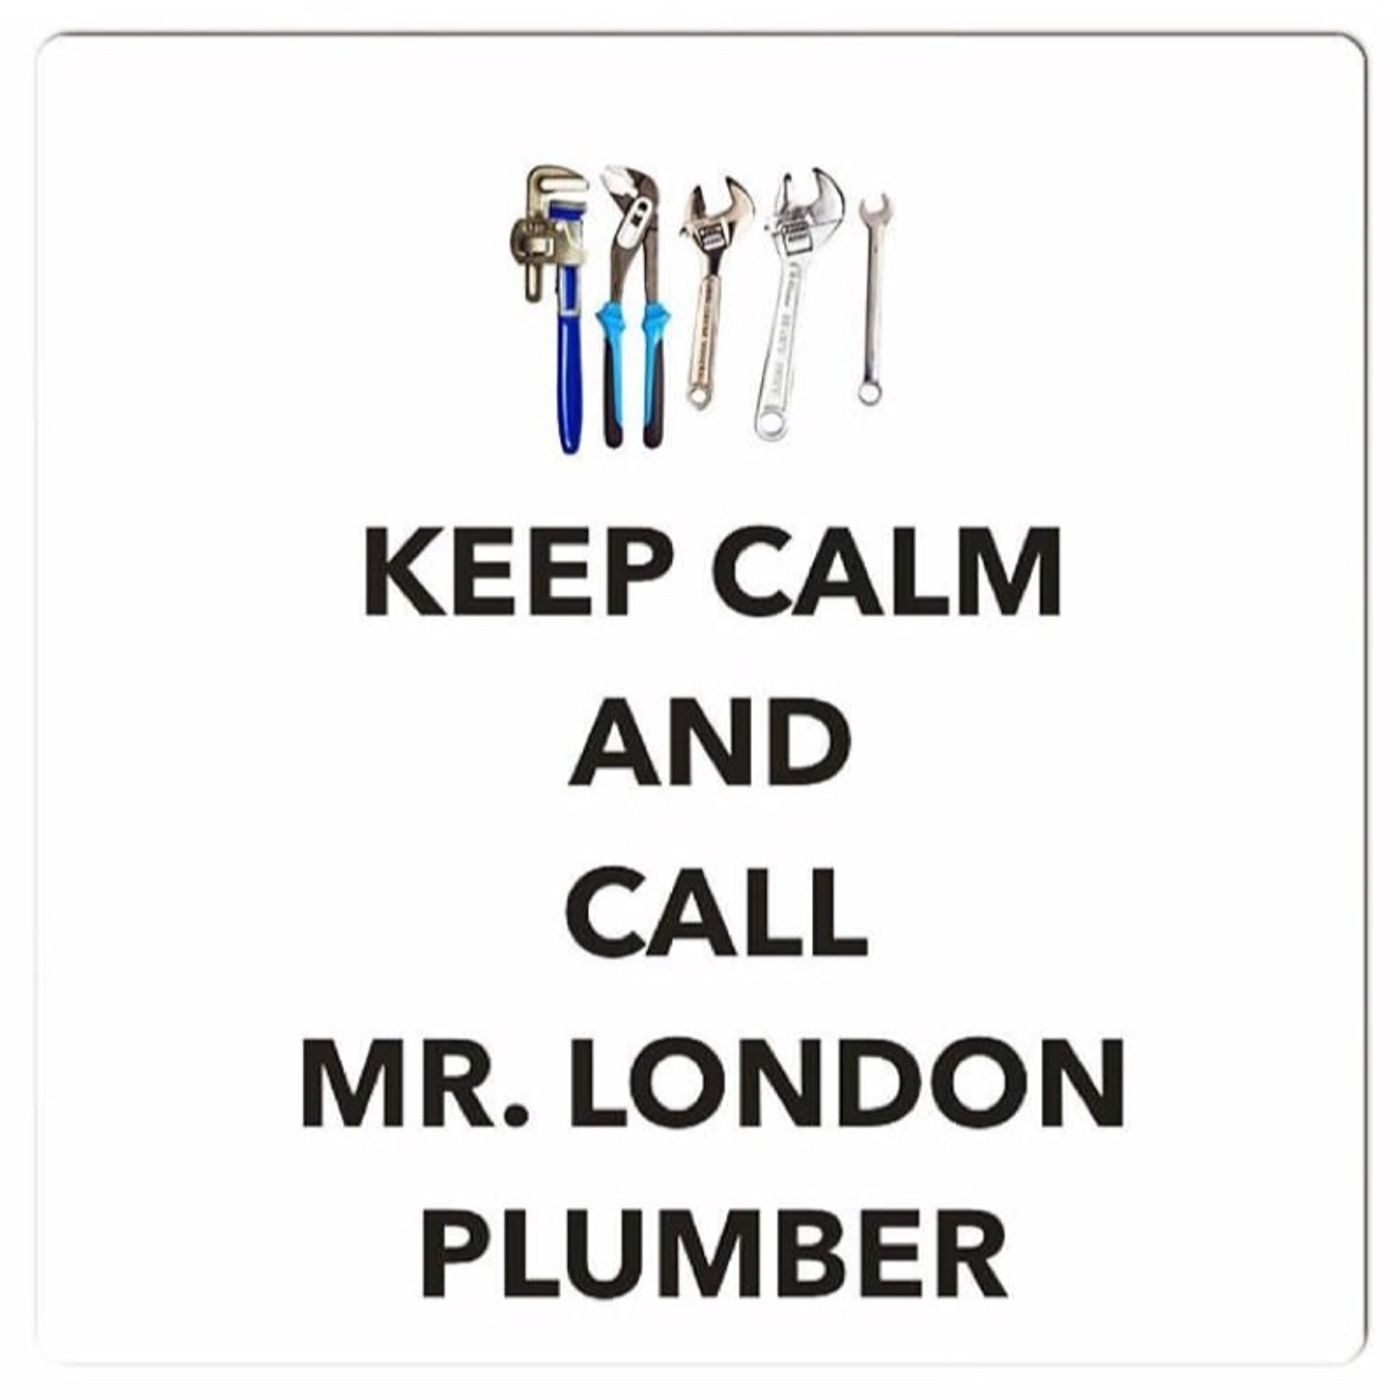 Mr London Plumber became a plumber